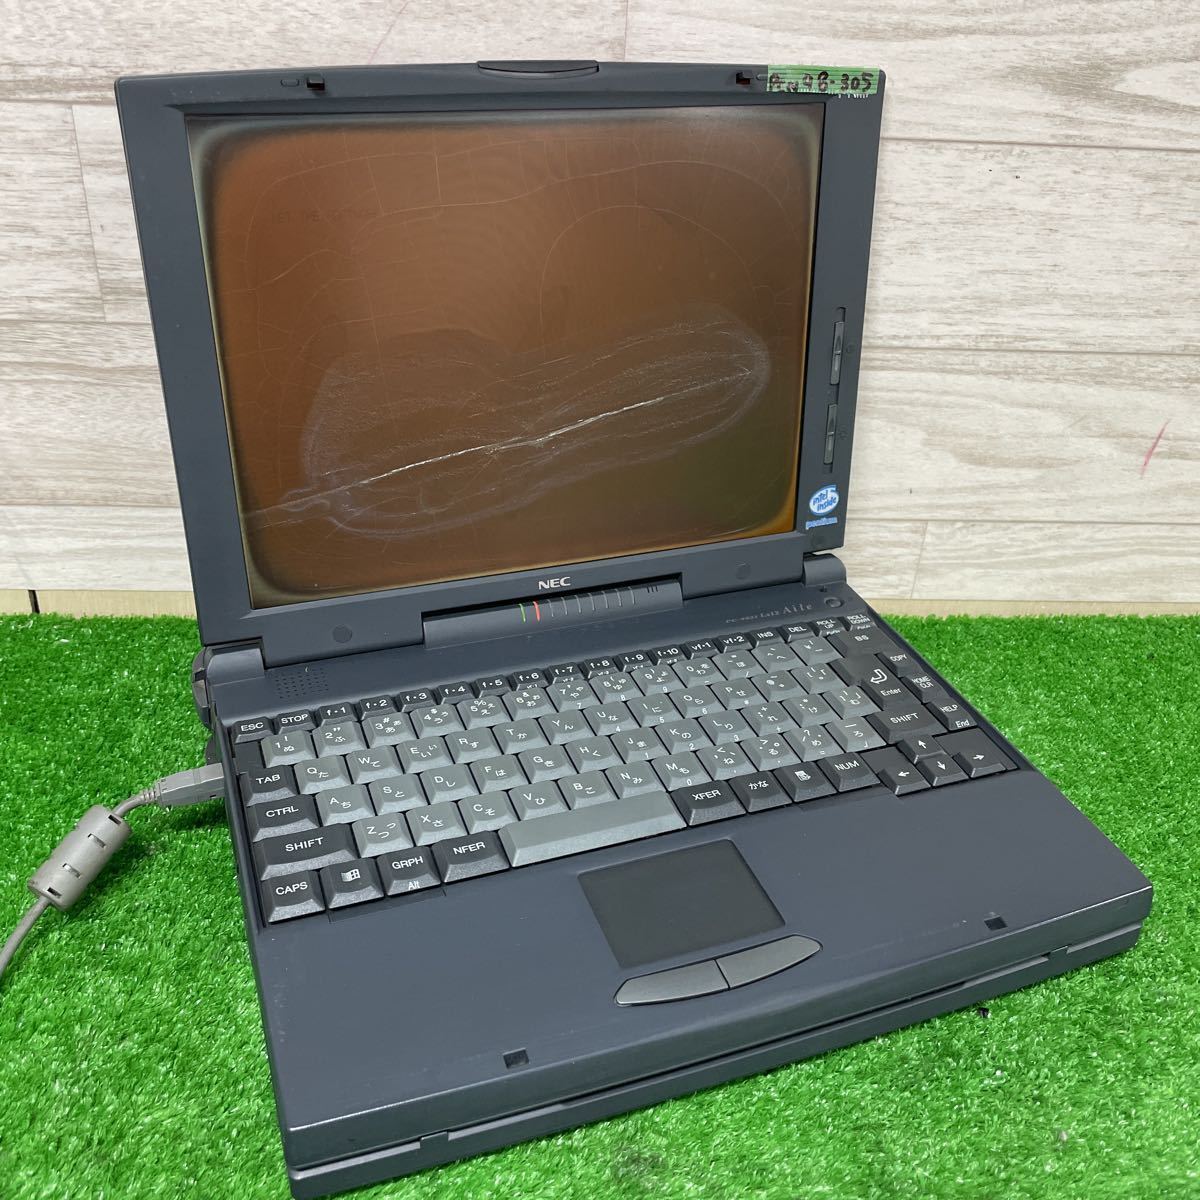 As is PCN98-305 super-discount PC98 notebook NEC PC9821Ls12/D10 junk